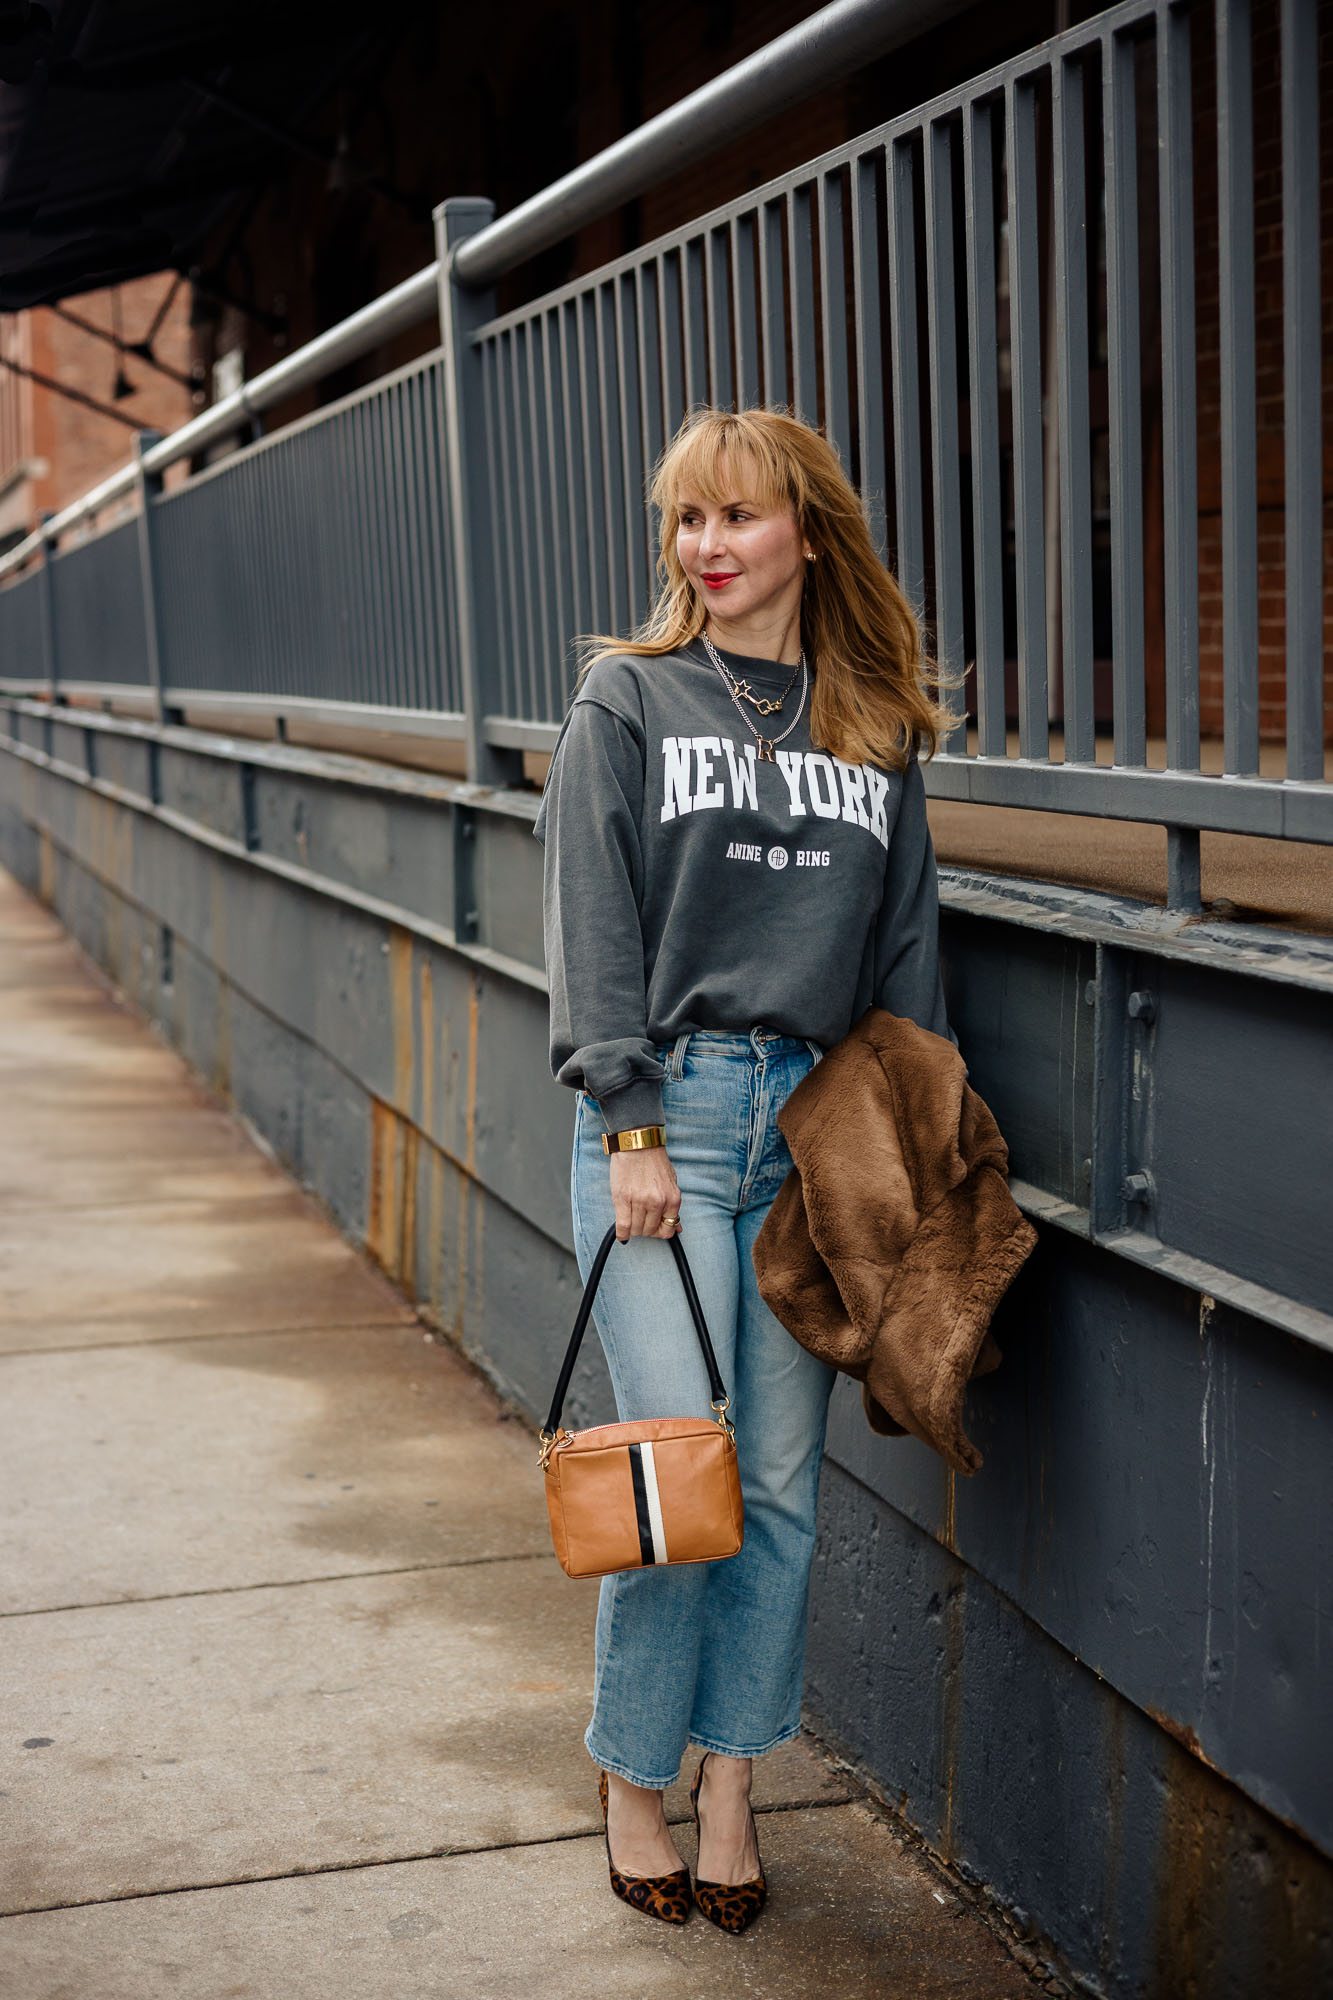 Bing New York Sweatshirt.Styled 5 Ways